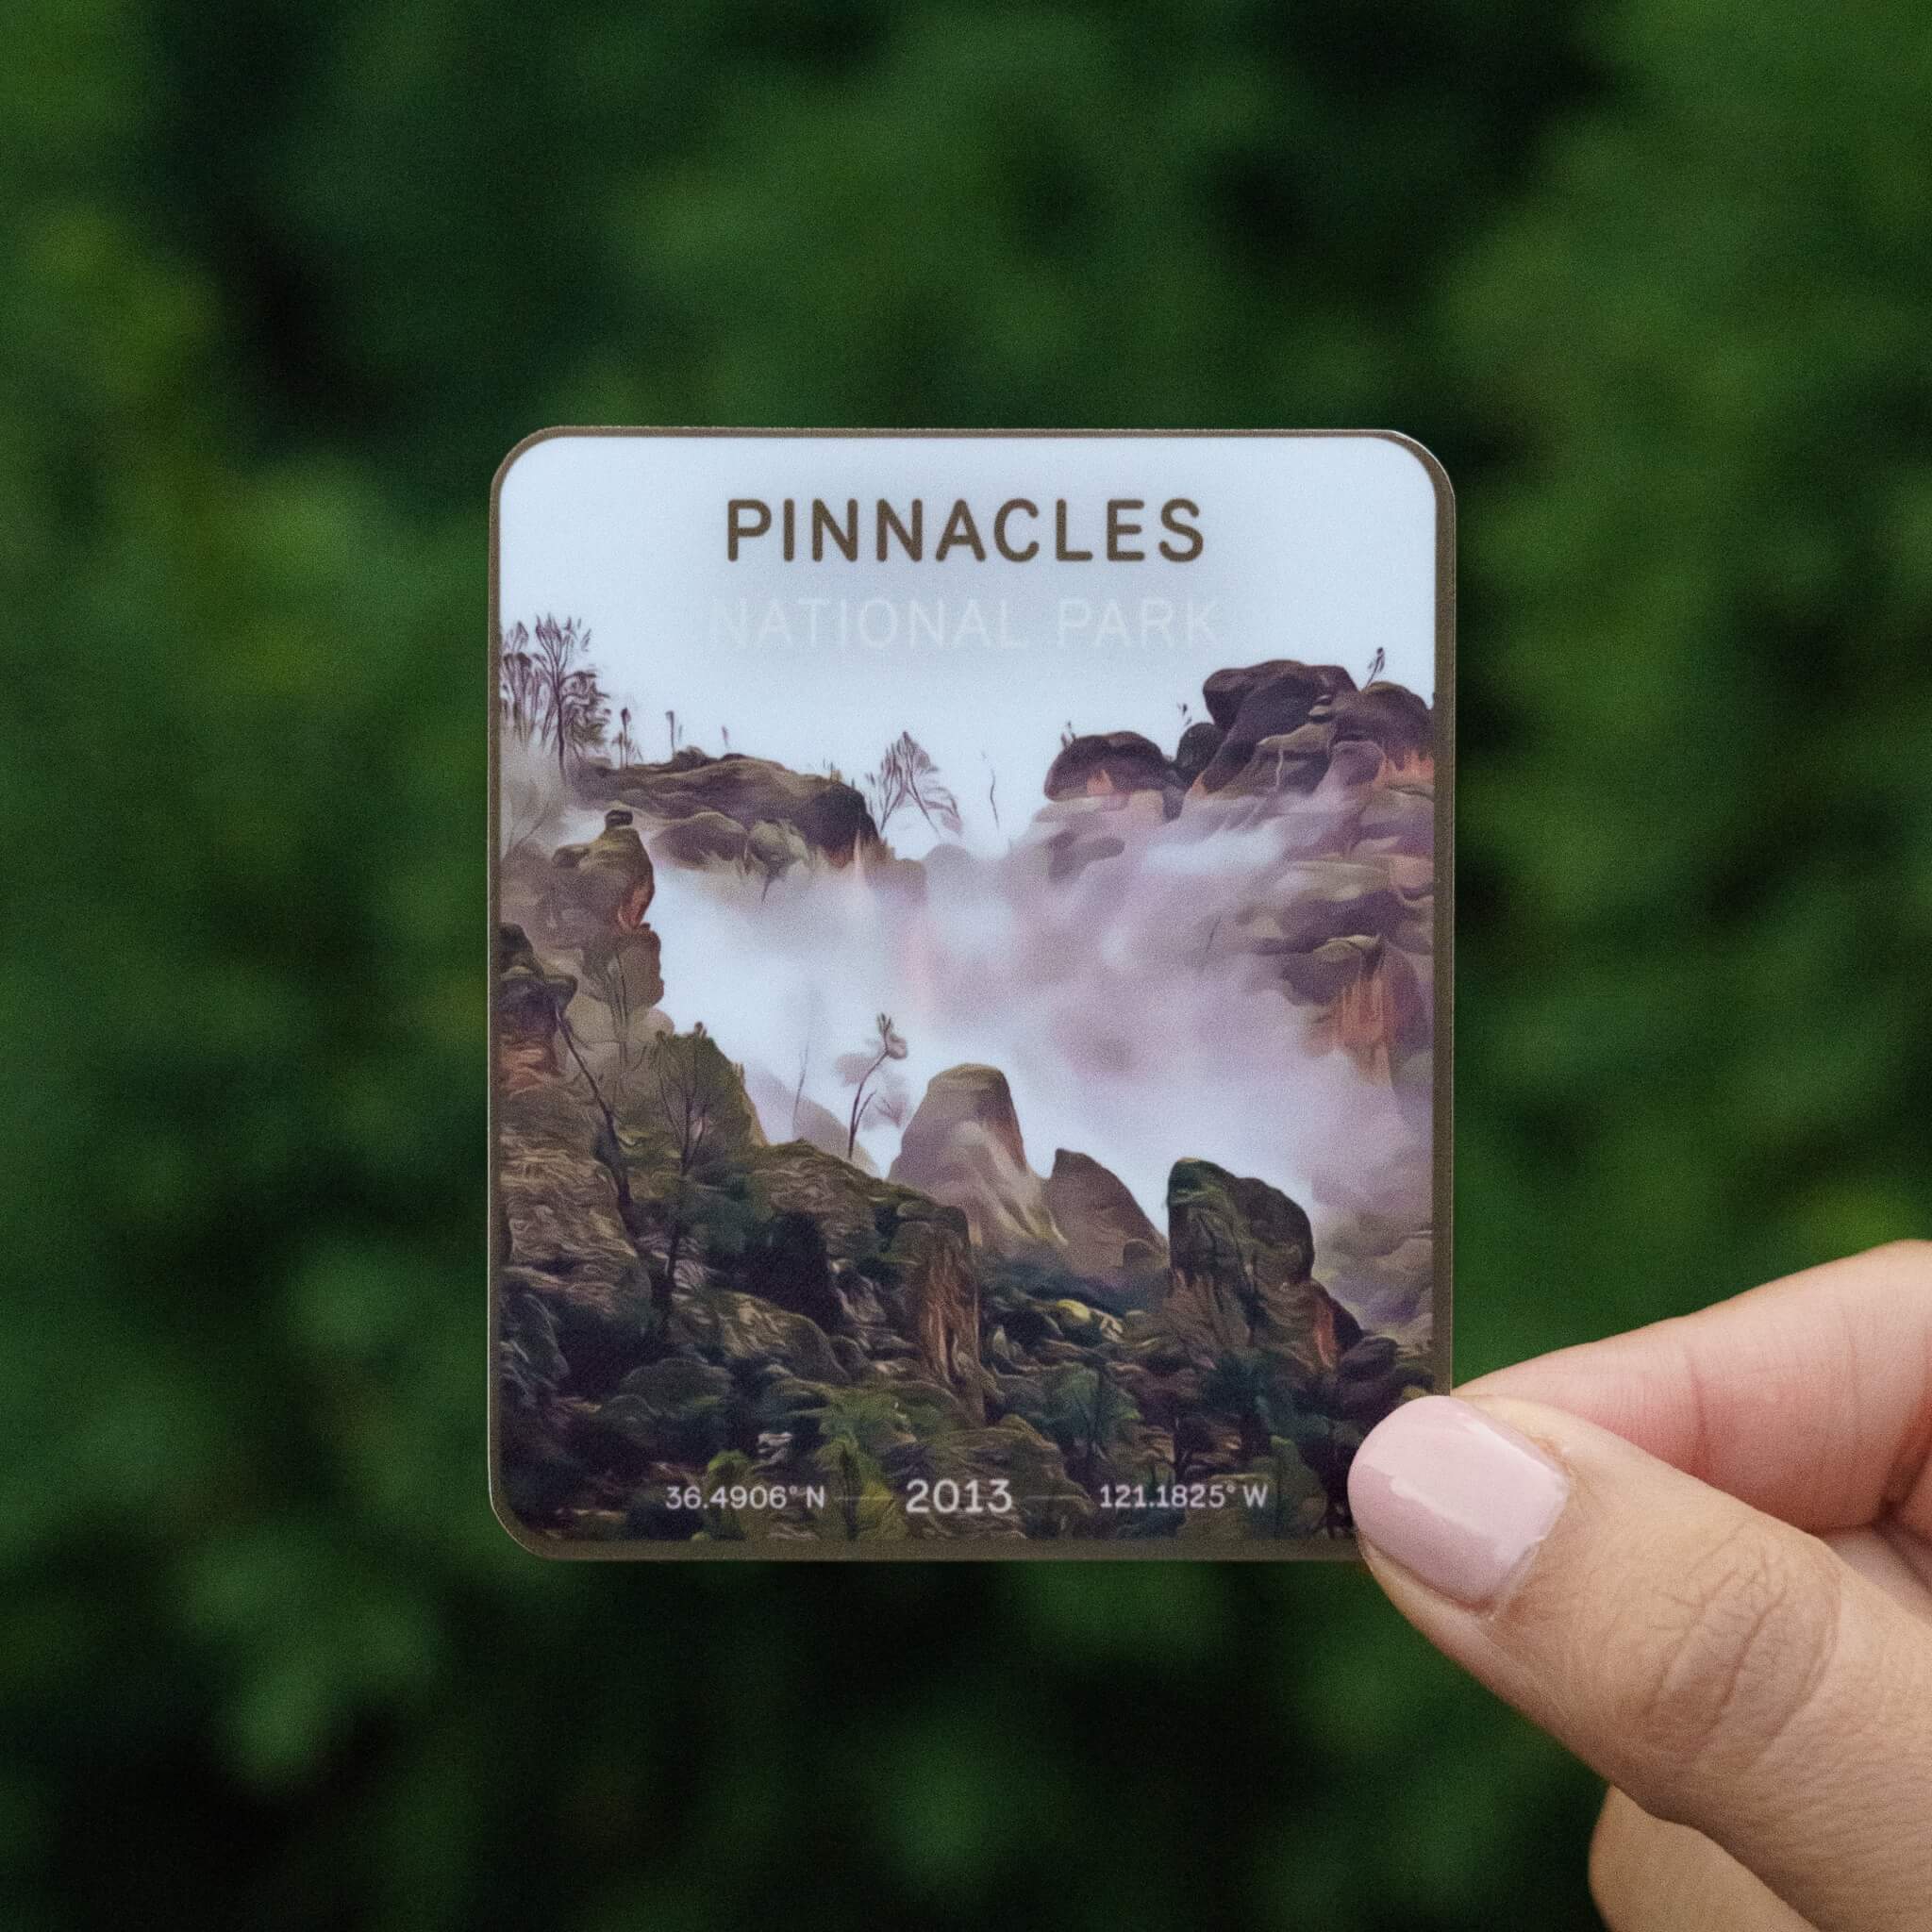 Pinnacles National Park Sticker